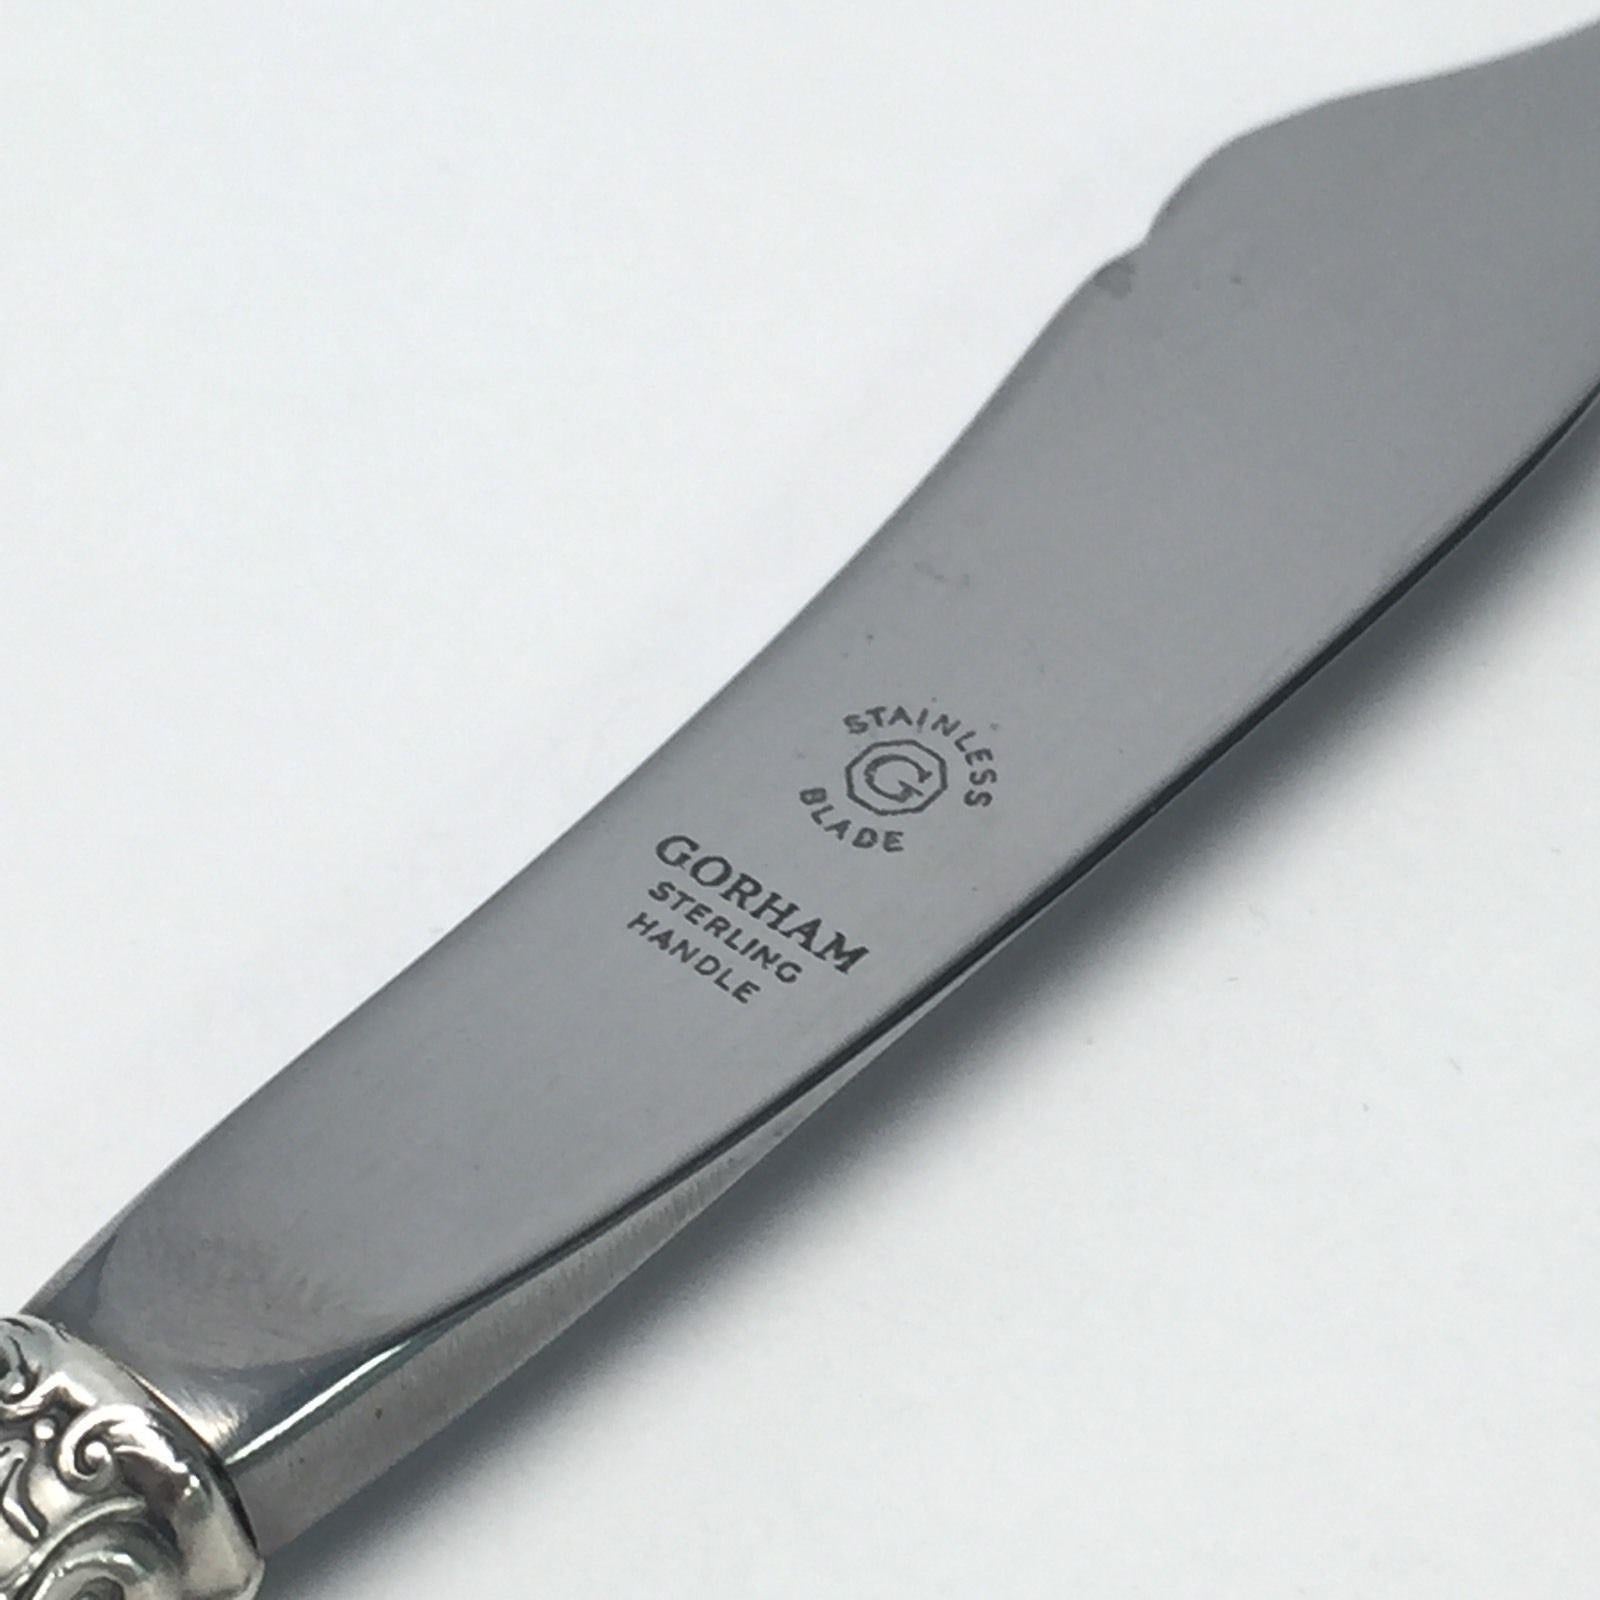 antique silver butter knife